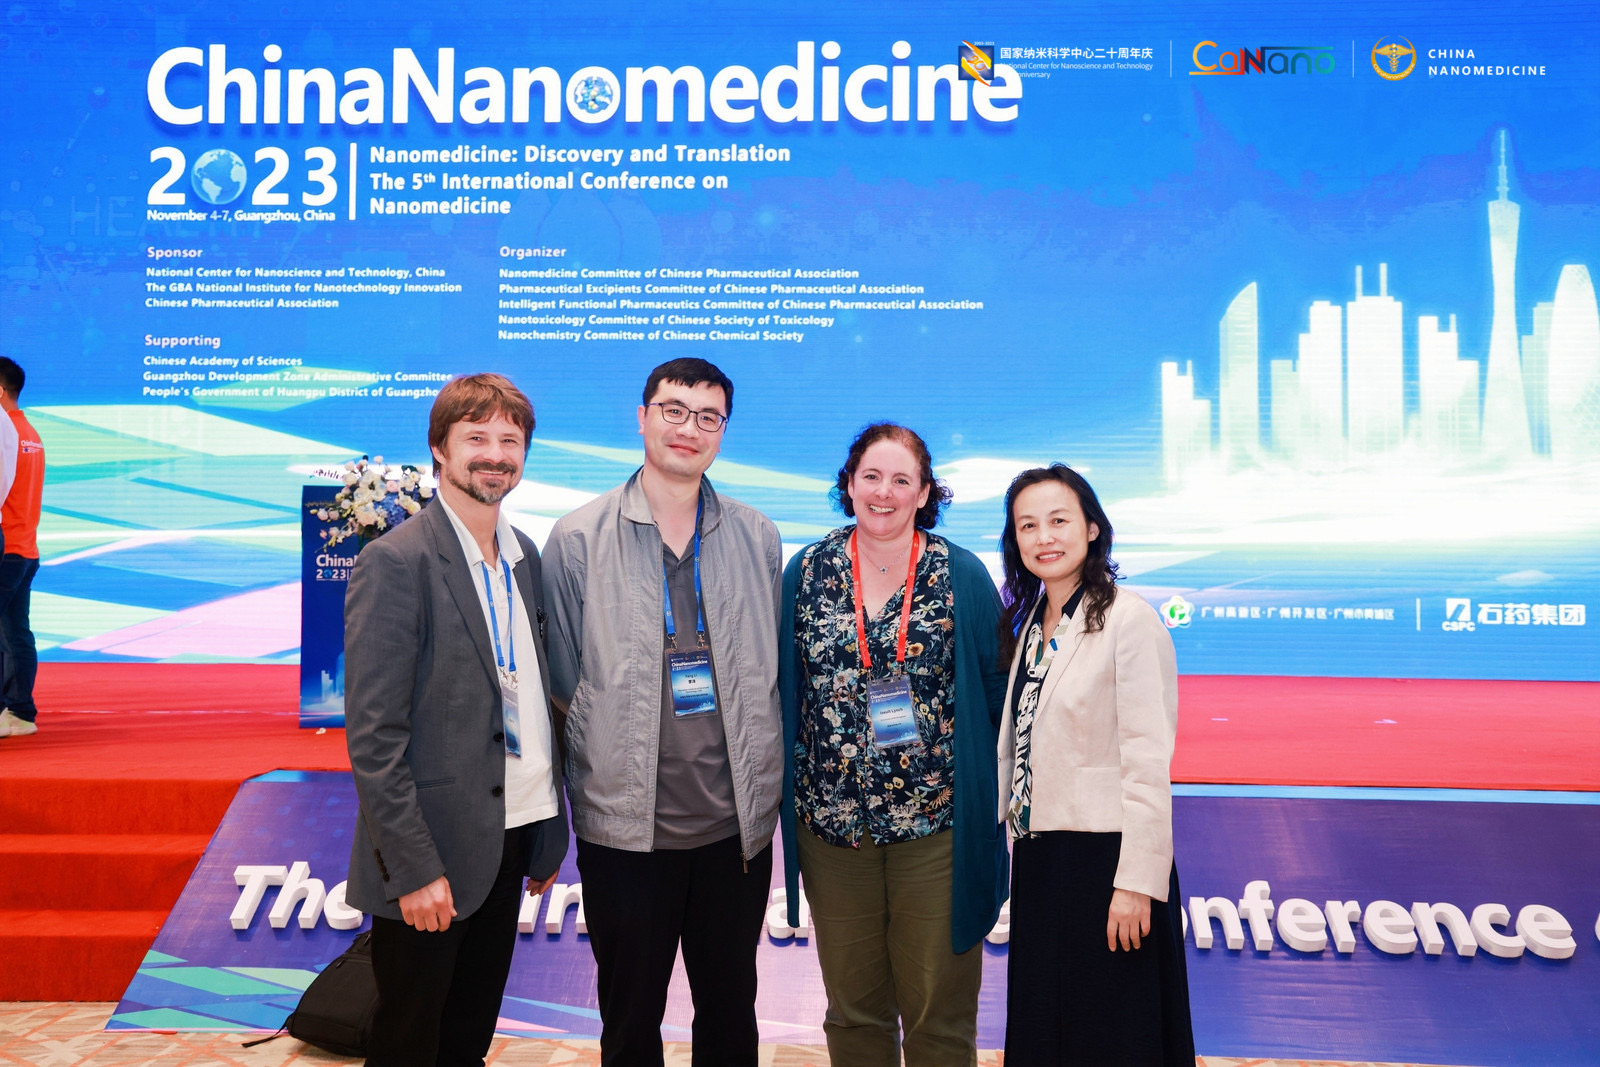 Collaborators meet (left to right): Martin Himly, Yang Li, Iseult Lynch, Chunying Chen